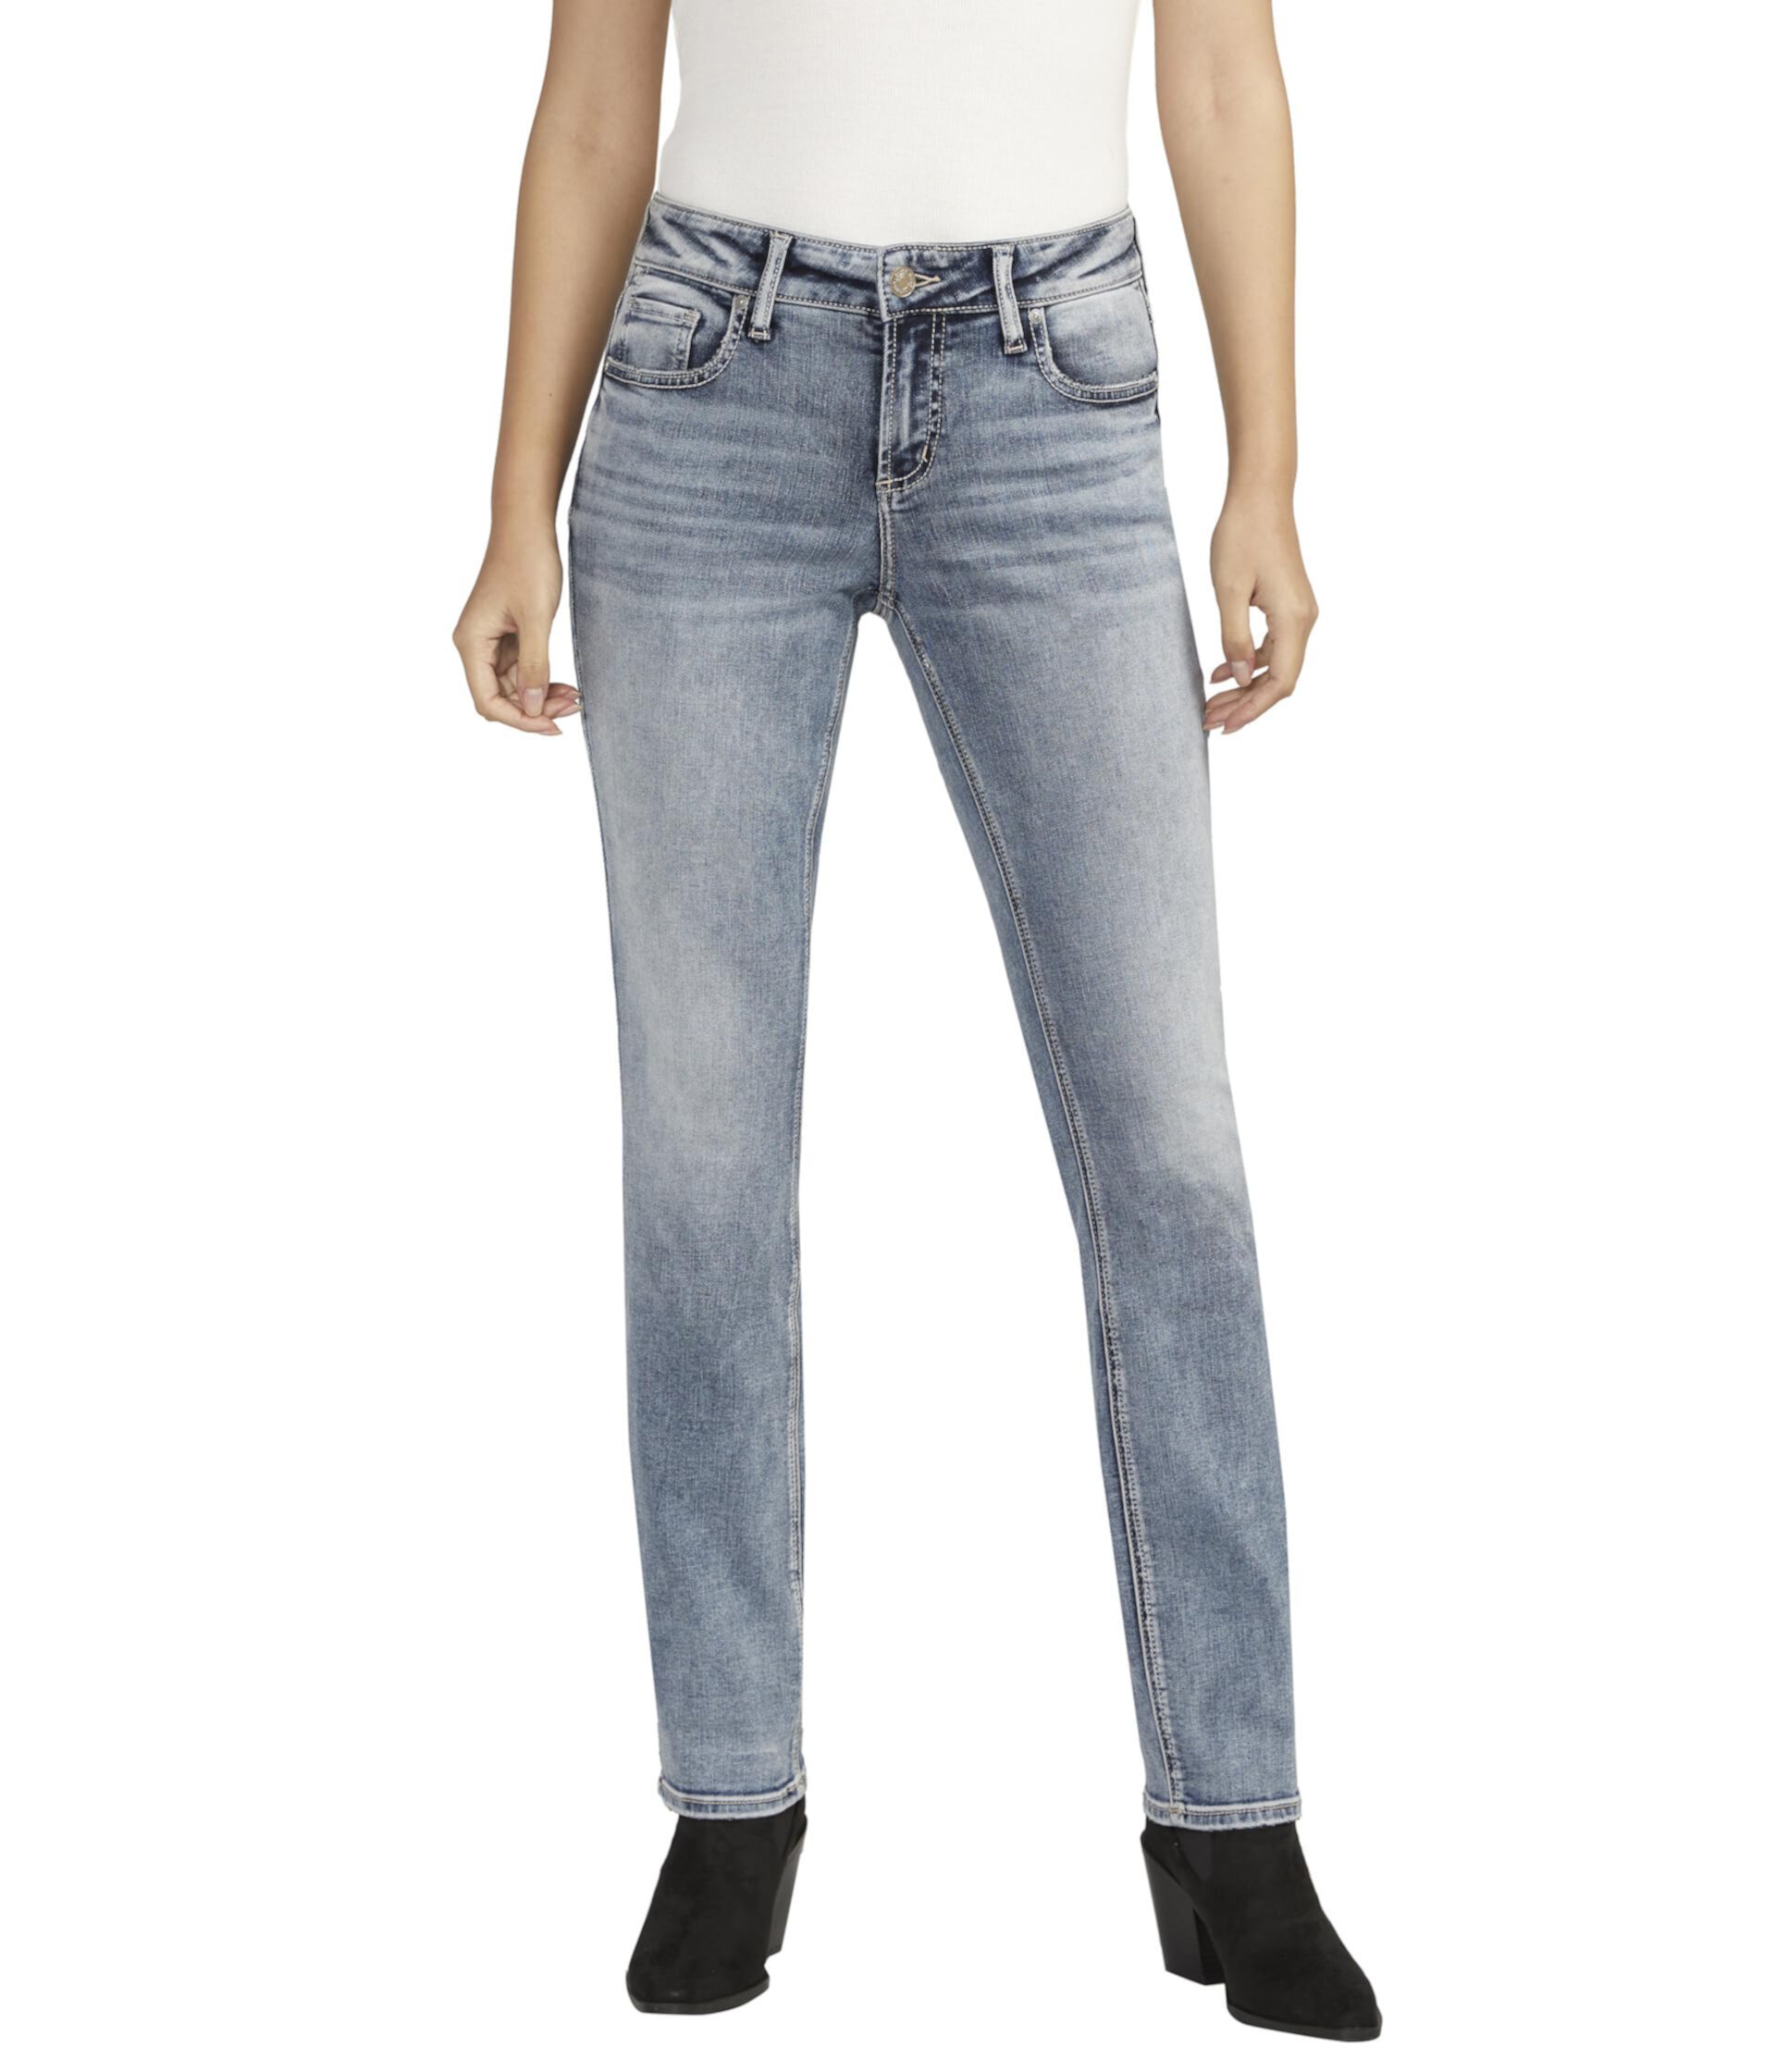 Прямые джинсы Elyse со средней посадкой L03403EDB204 Silver Jeans Co.